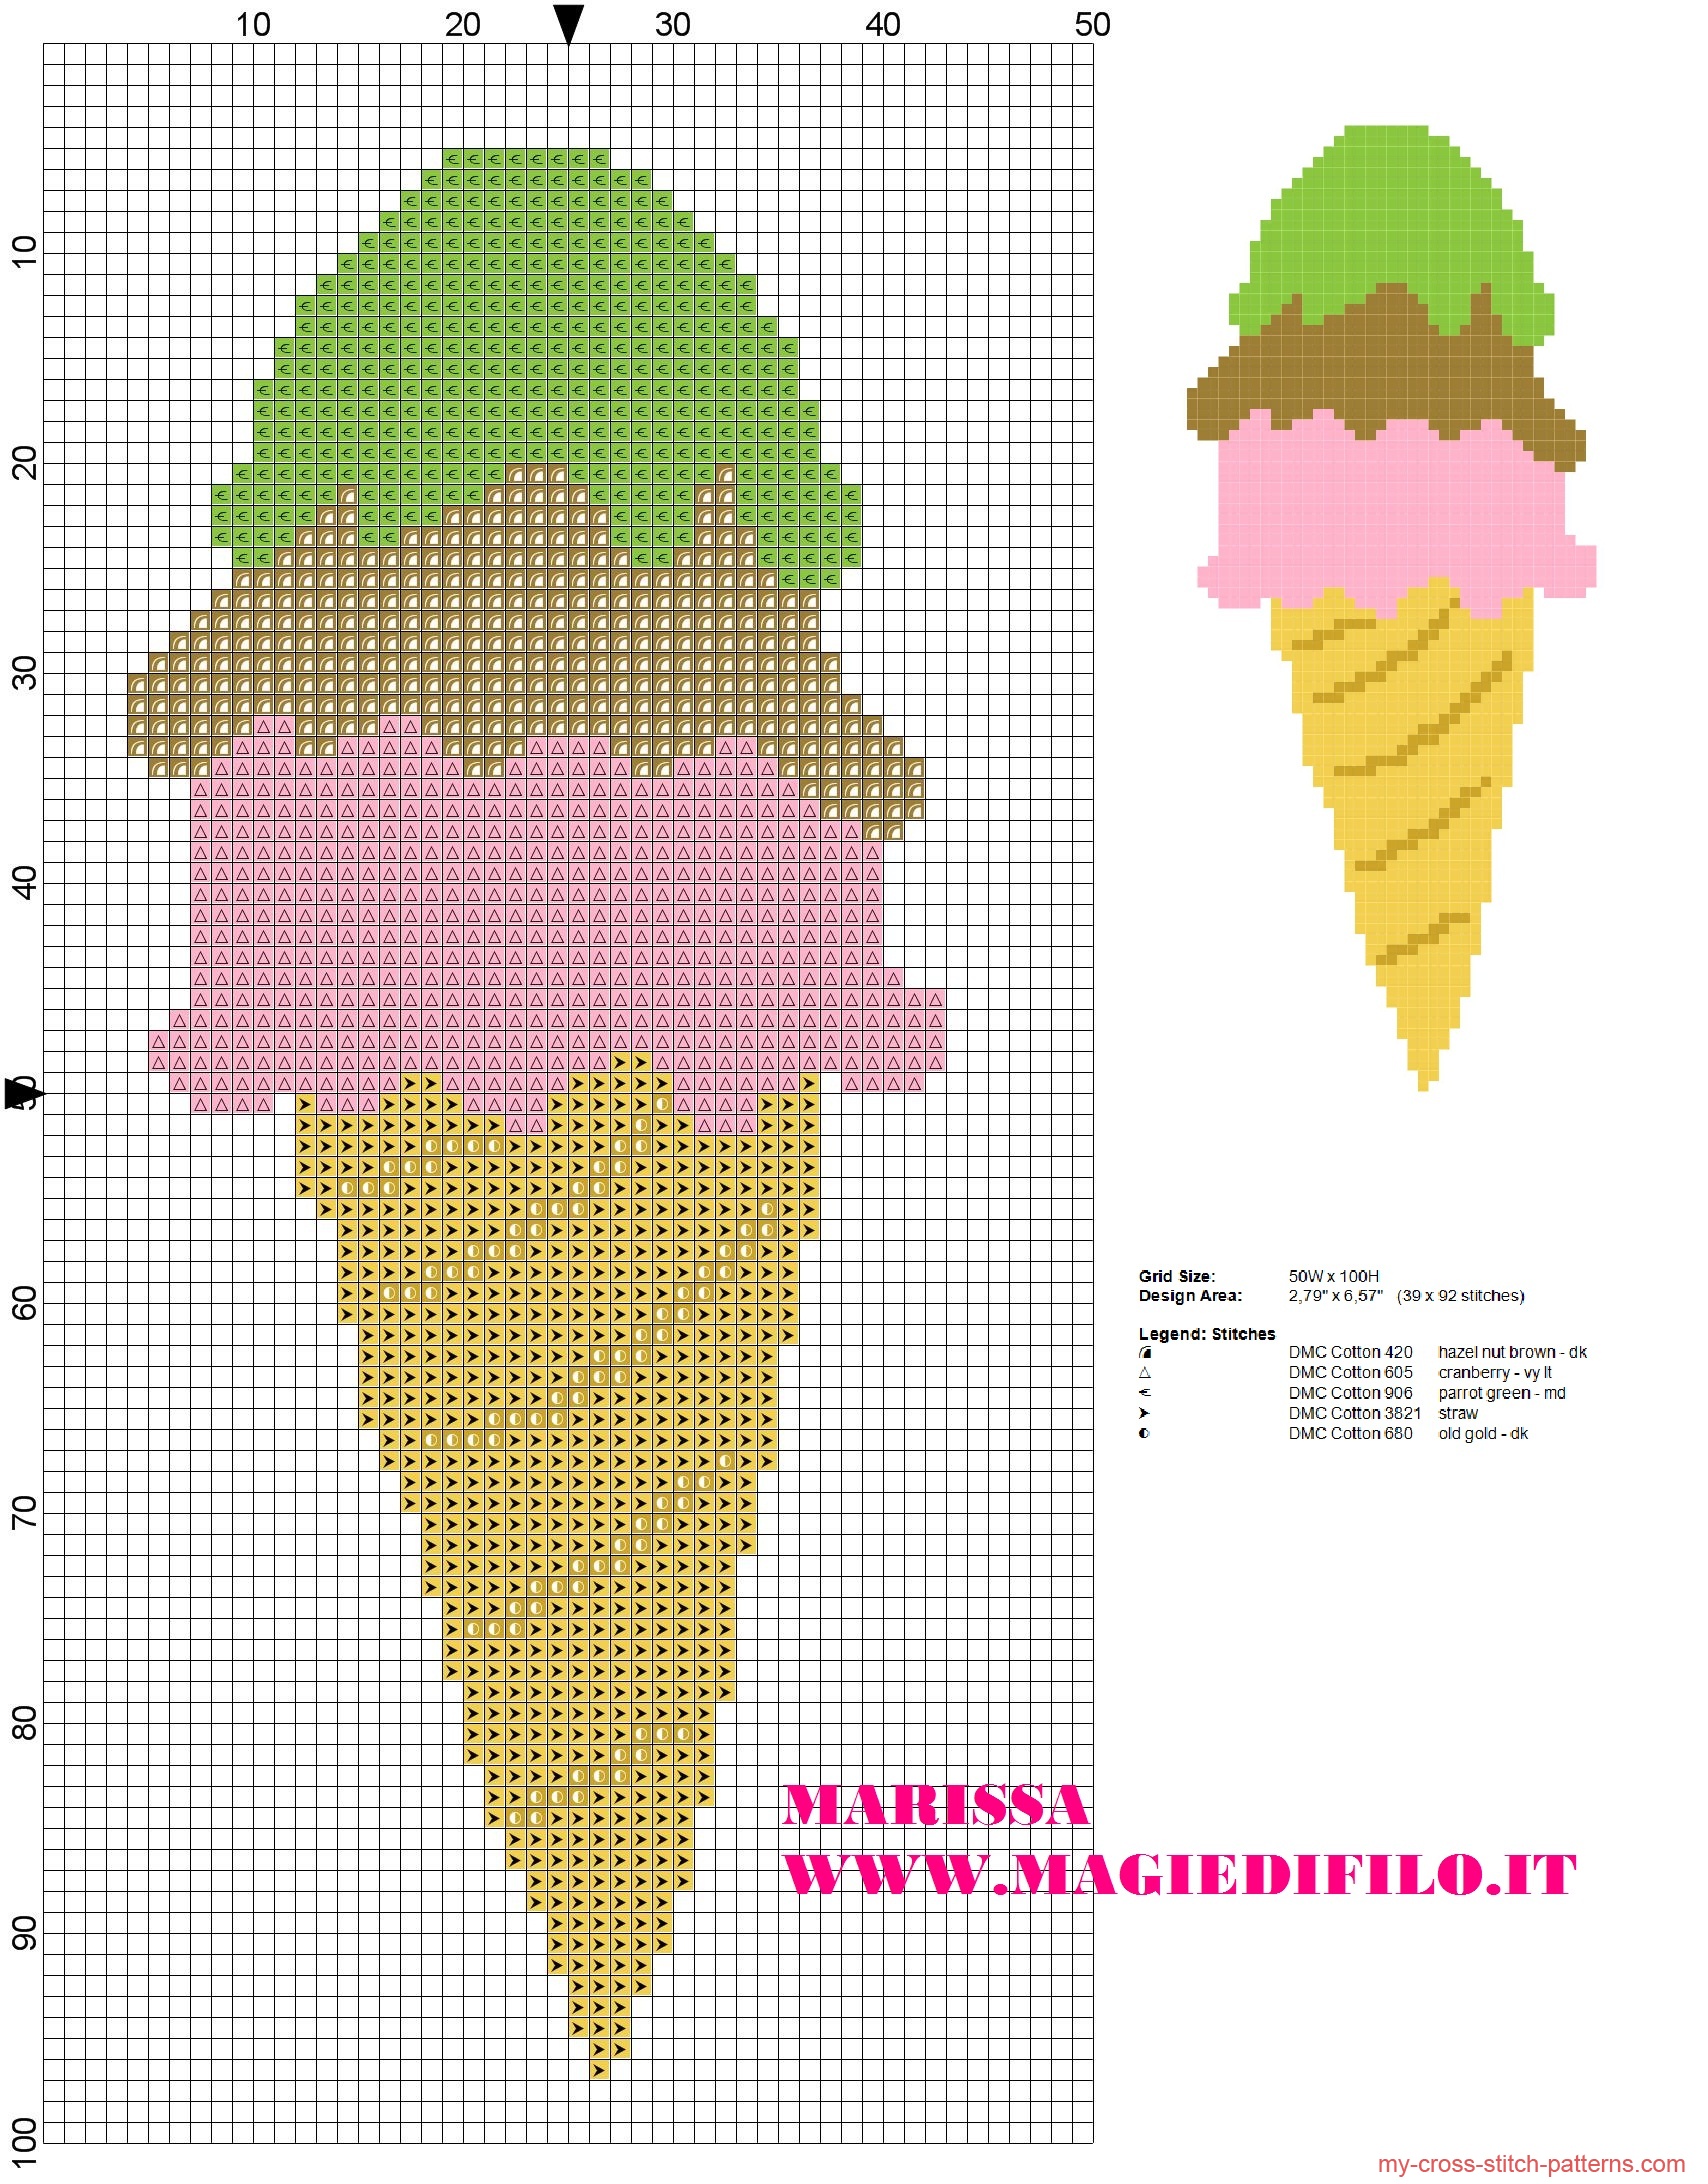 ice_cream_cone_three_flavors_chocolate_strawberry_and_pistachio